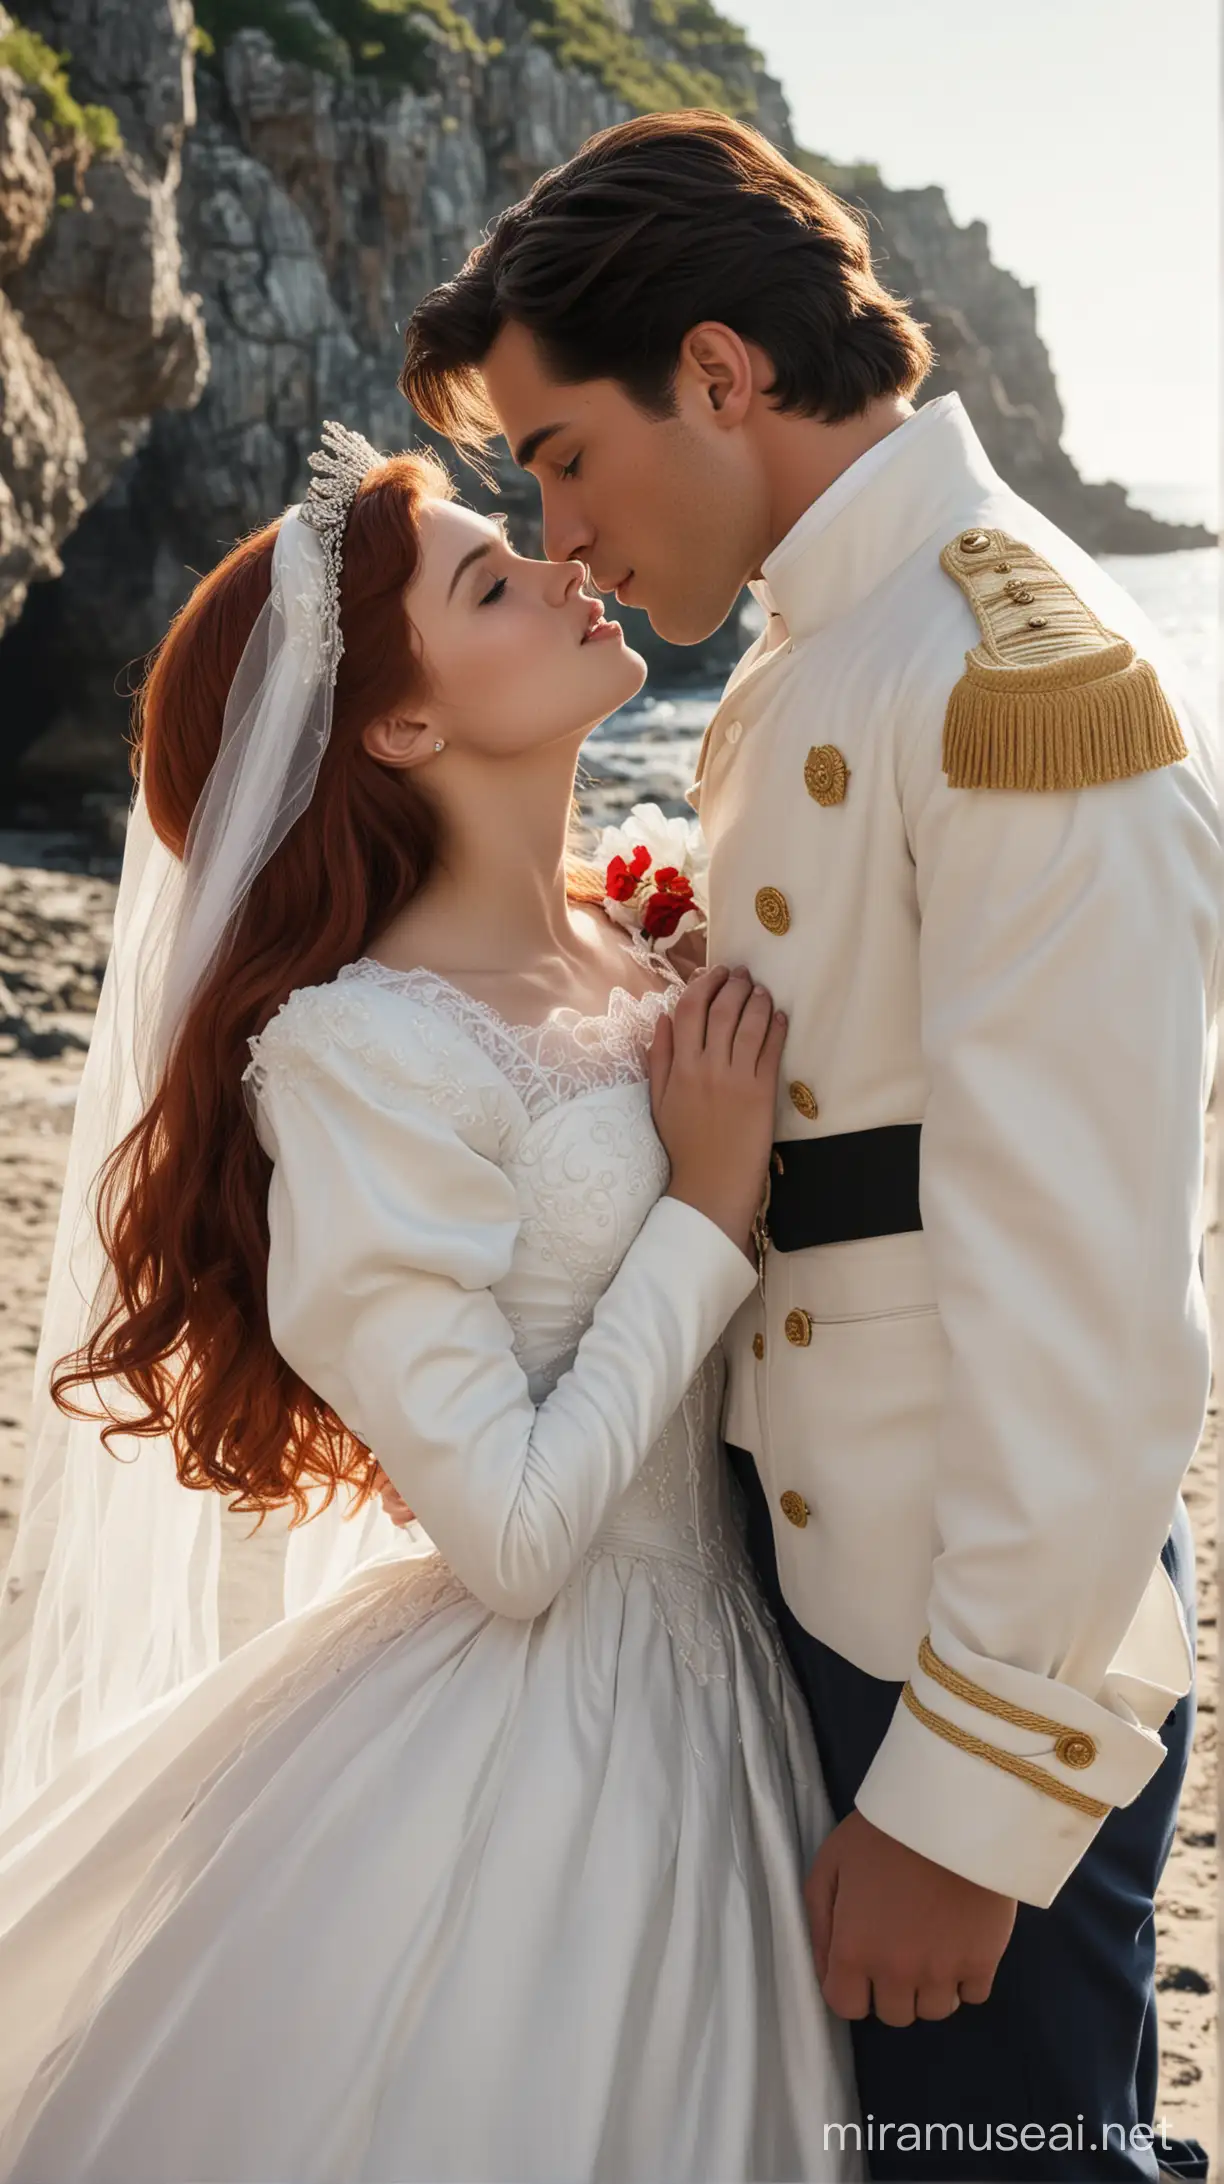 Romantic Beach Kiss between Danish Prince Eric and Princess Ariel in 8K Resolution